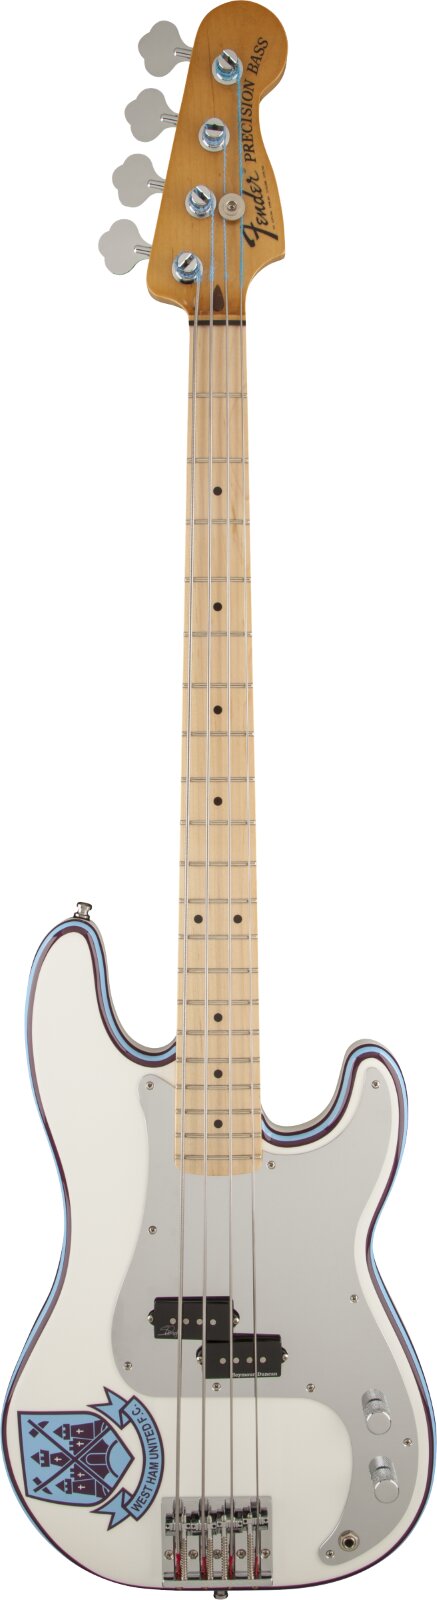 Fender Steve Harris Precision Bass Mapple Fingerboard Olympic White : photo 1